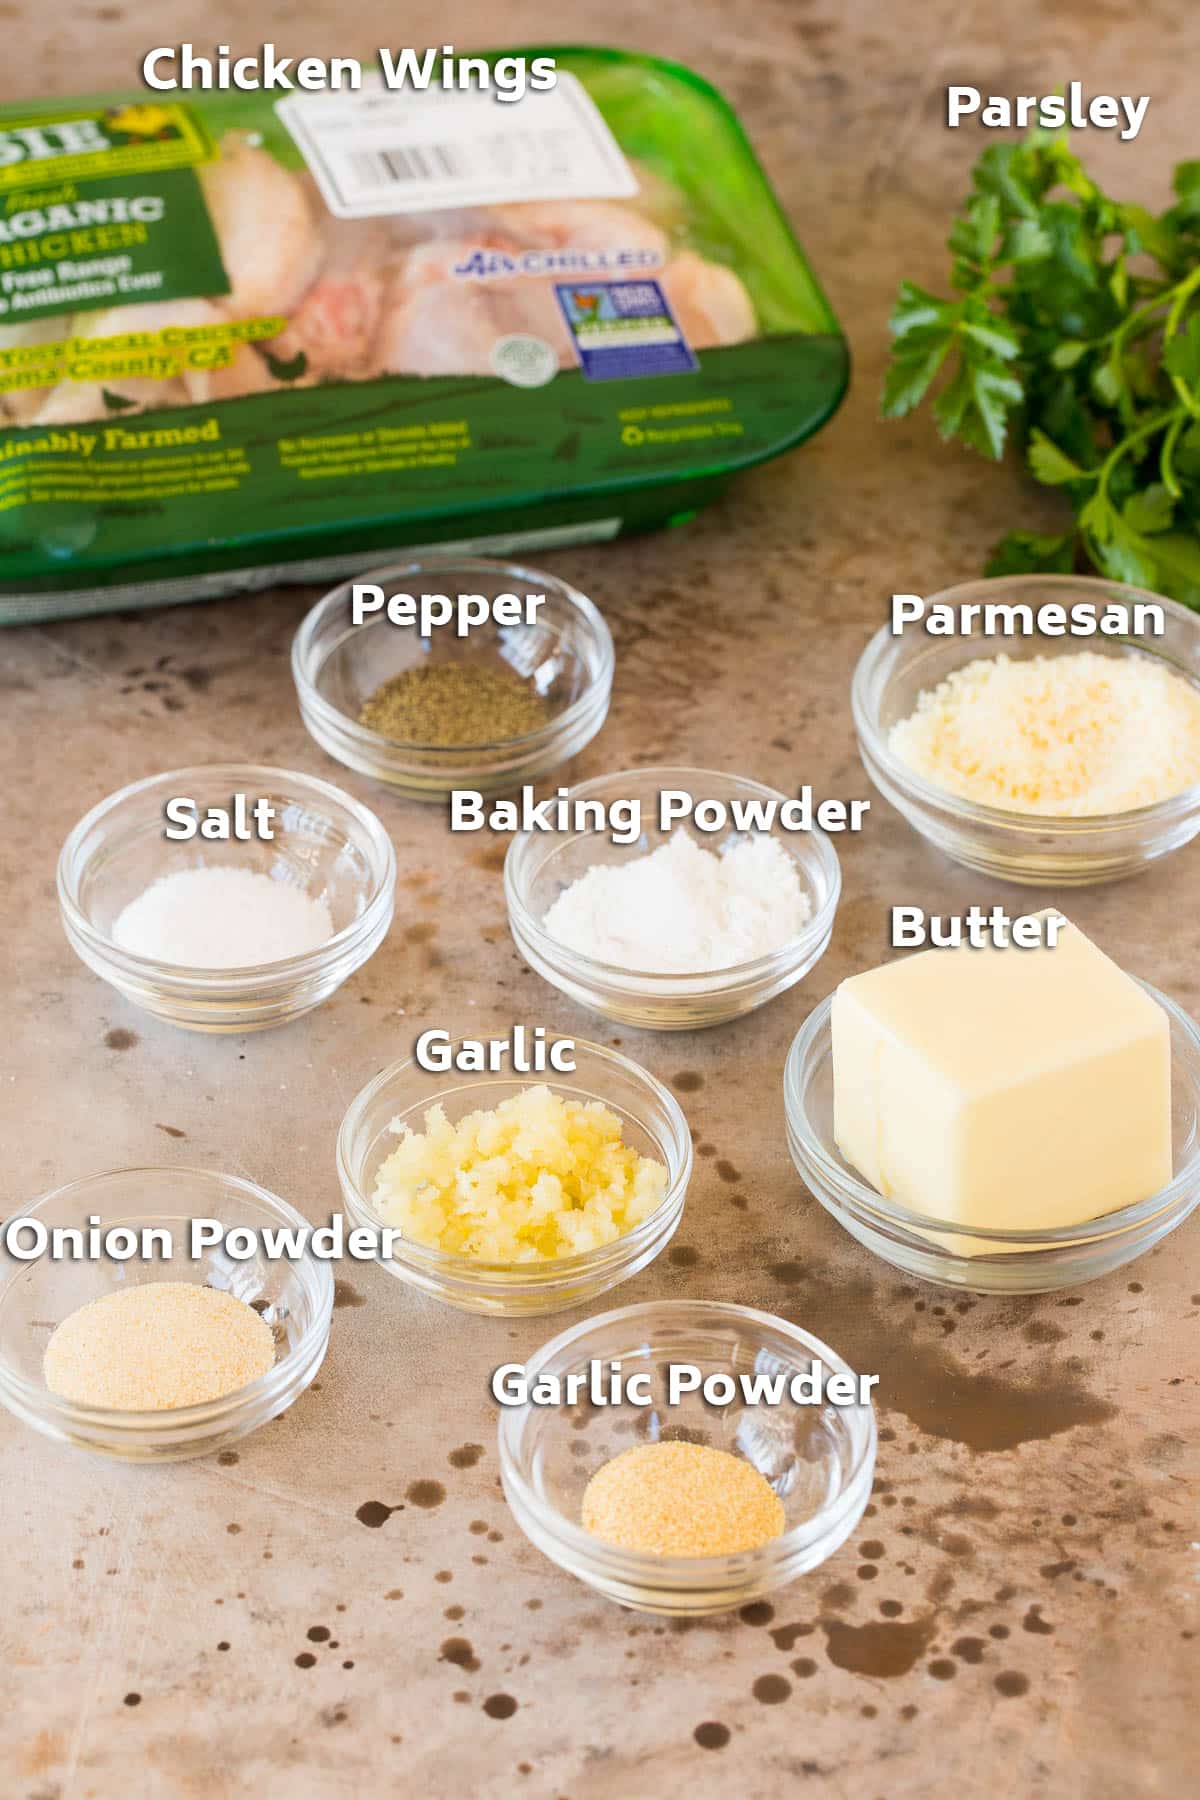 Ingredients including chicken wings, butter, seasonings and parmesan.